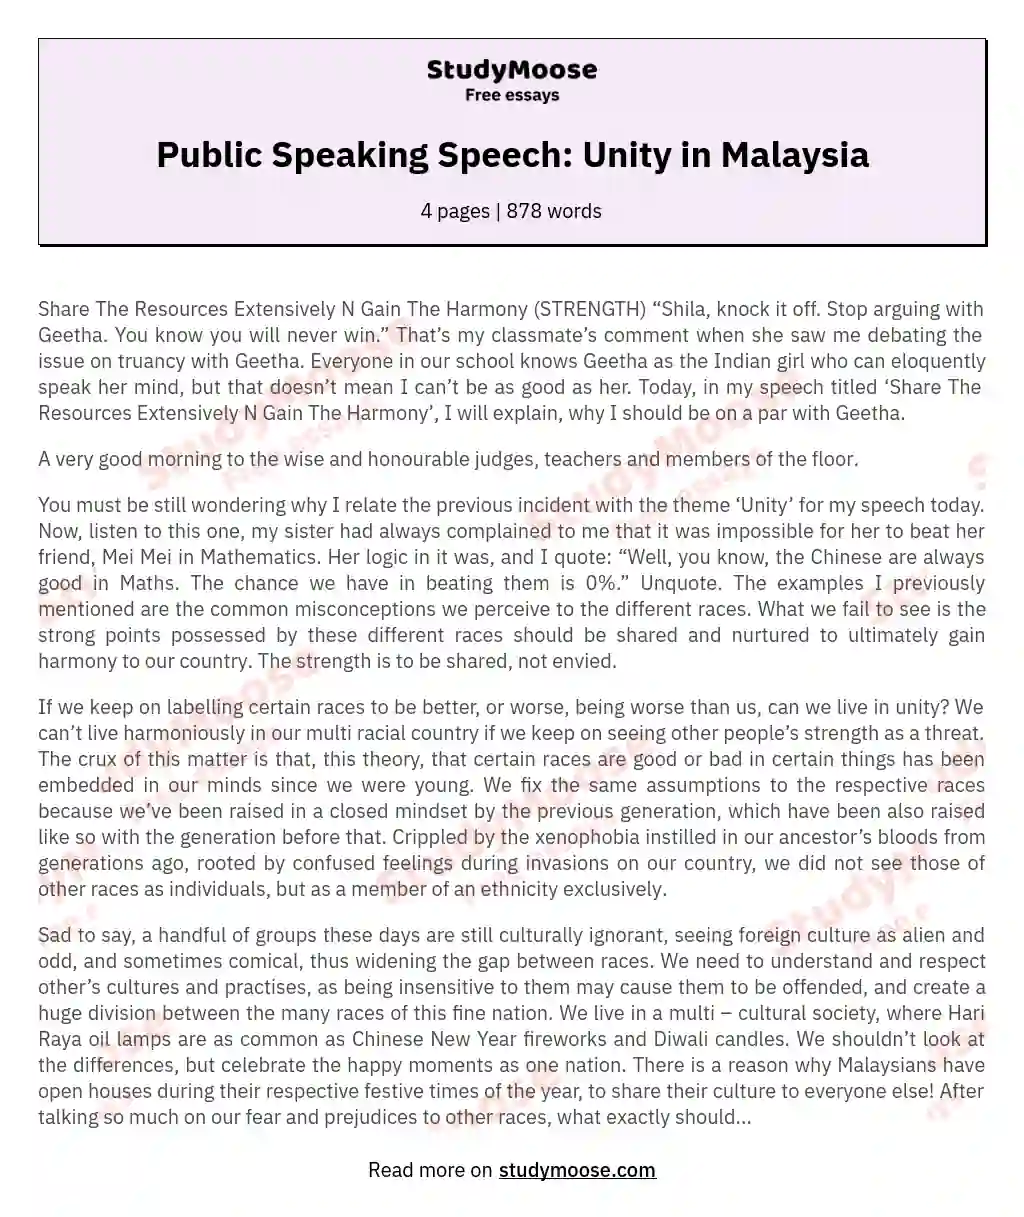 Public Speaking Speech: Unity in Malaysia essay